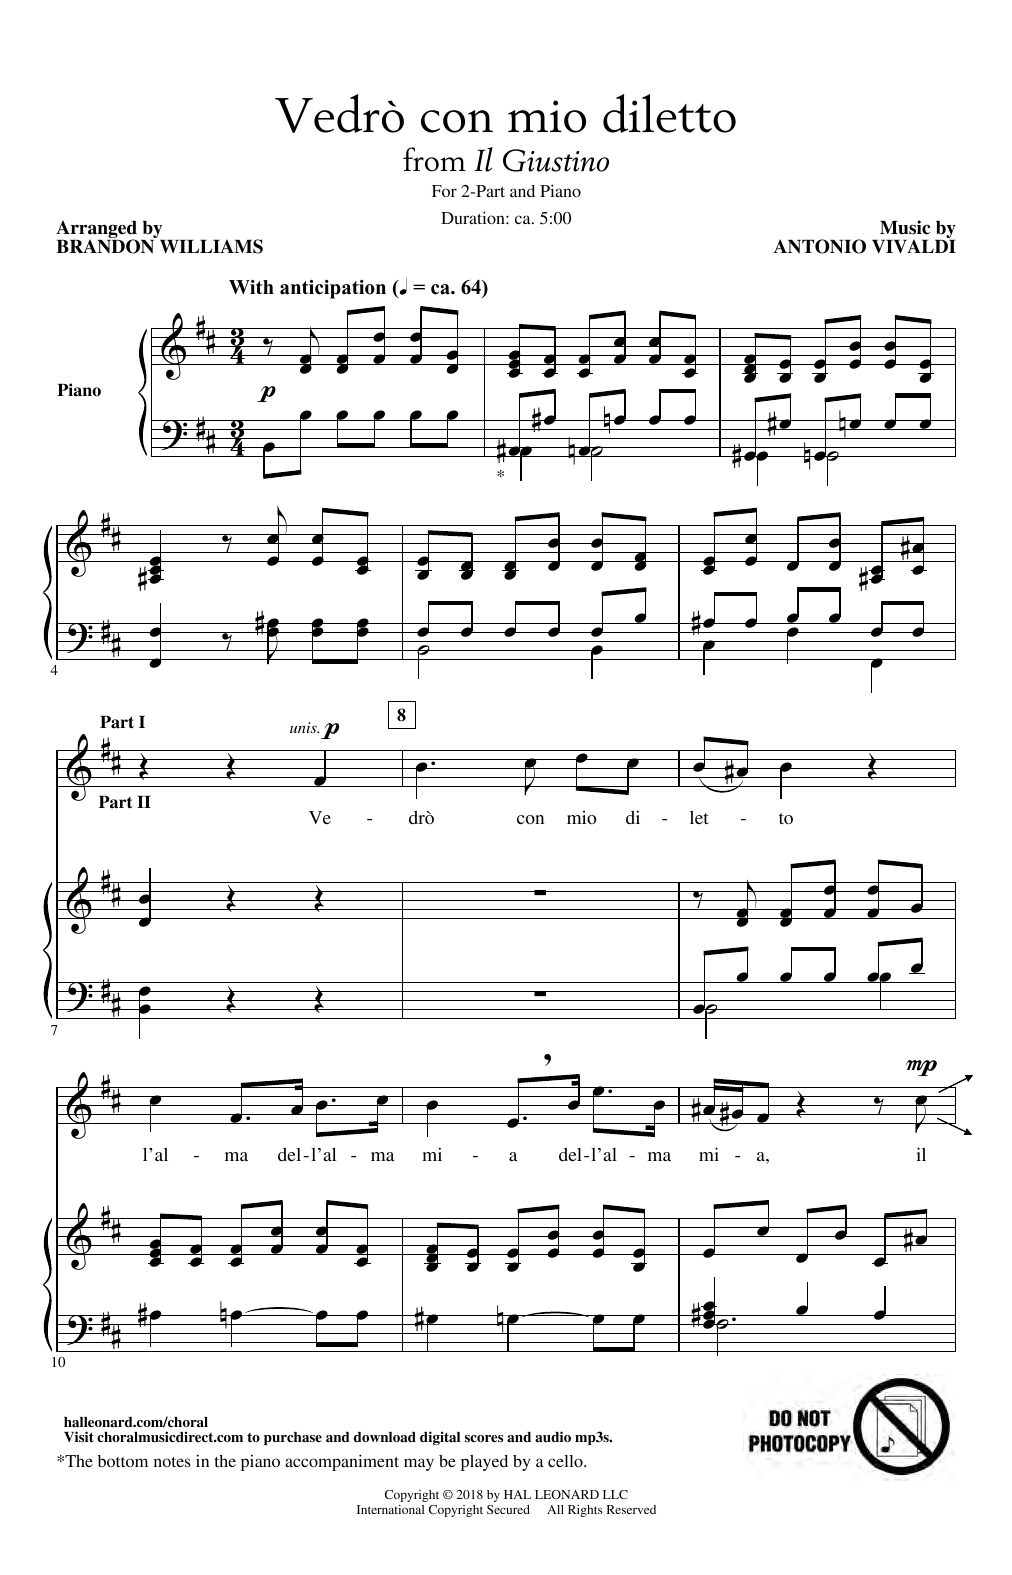 Antonio Vivaldi Vedro Con Mio Diletto (arr. Brandon Williams) Sheet Music Notes & Chords for 2-Part Choir - Download or Print PDF